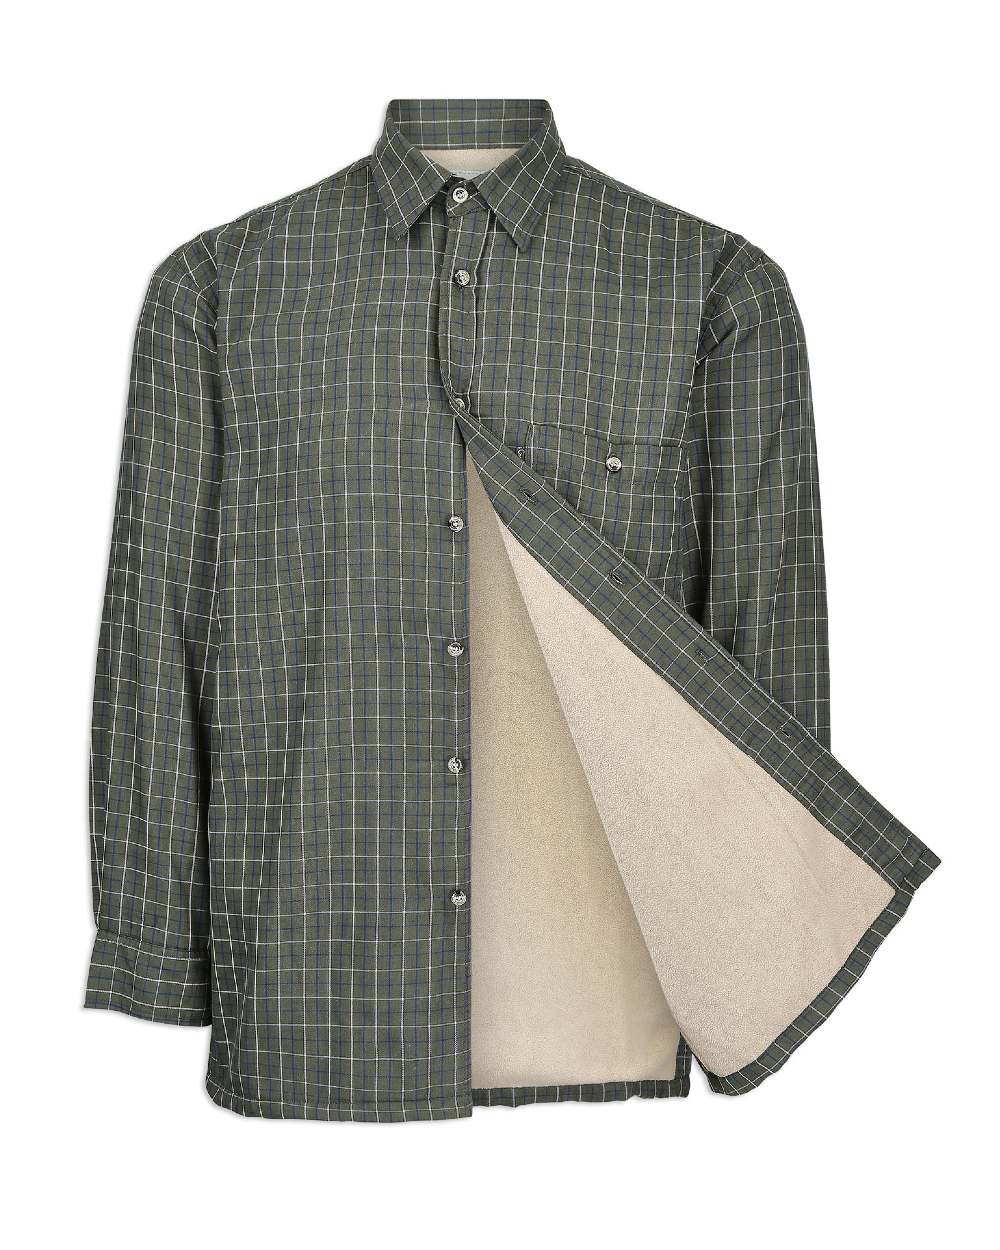 Champion Milton II Micro Fleece Lined Shirt in Green